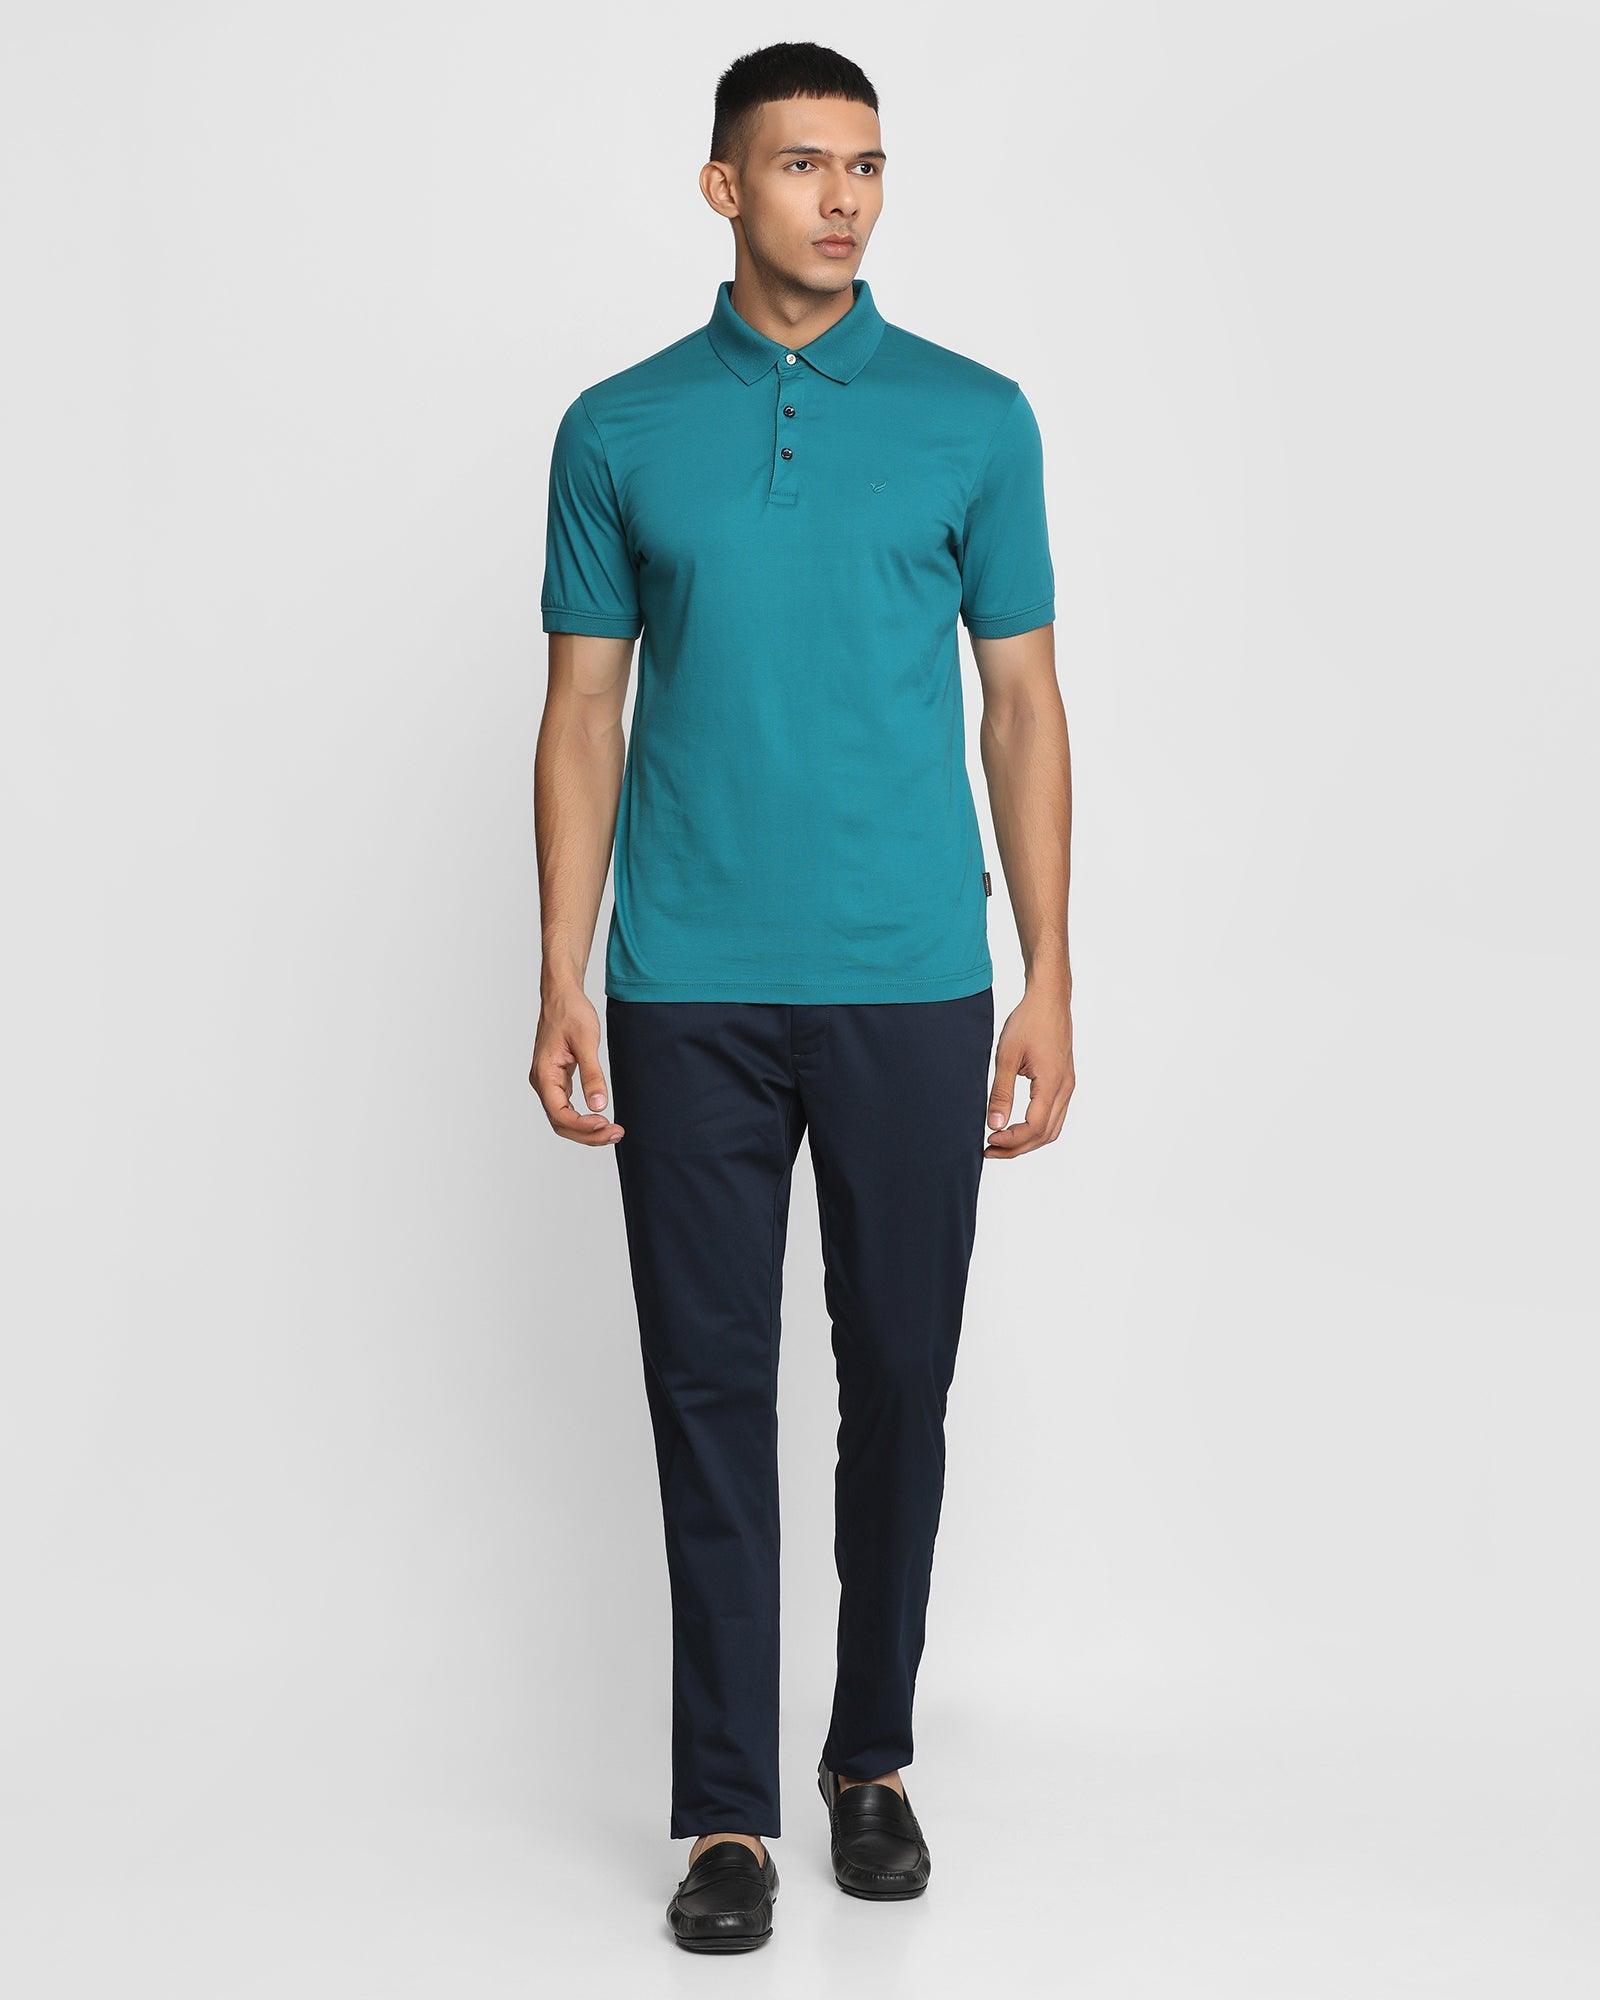 Polo Teal Green Solid T Shirt - David